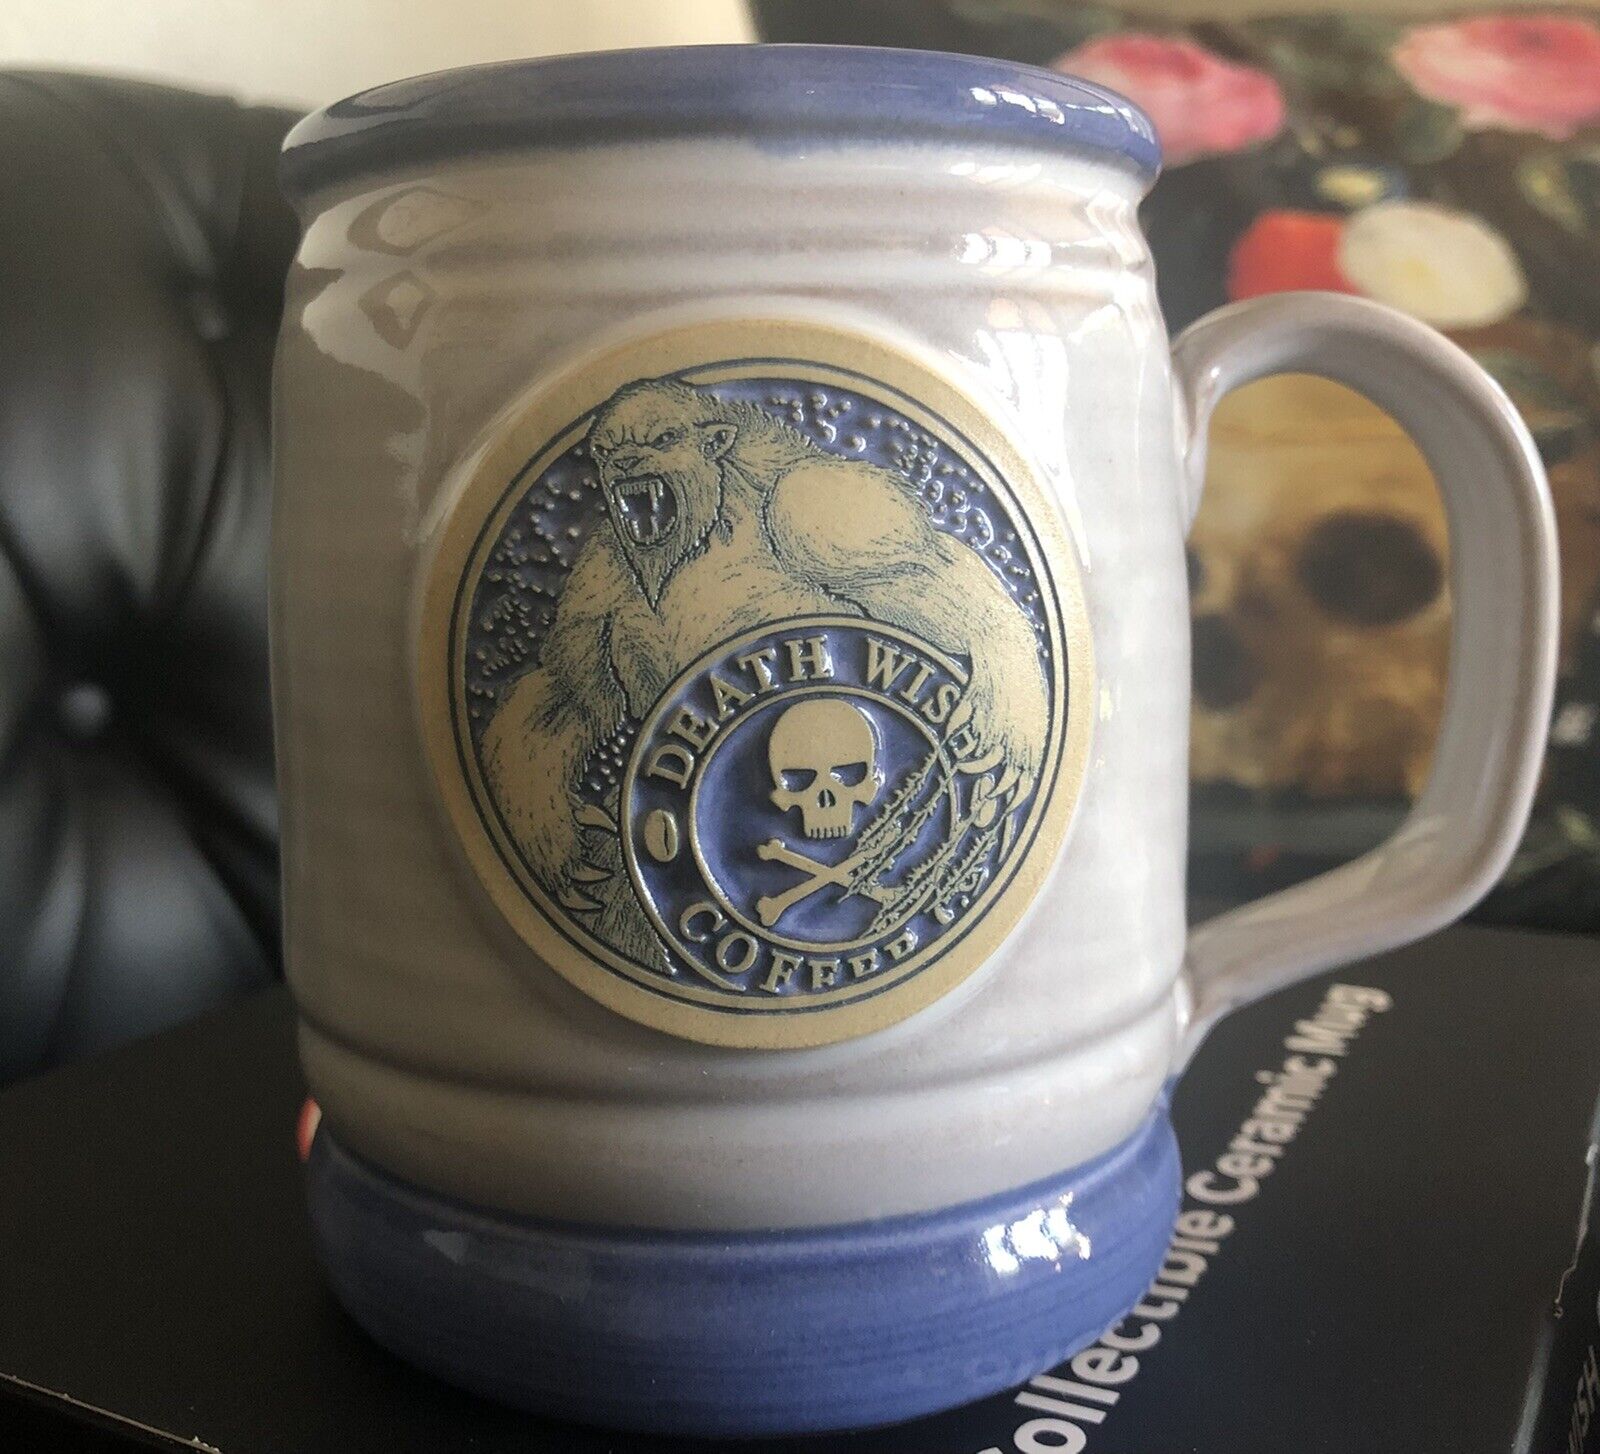 Signed Death Wish Coffee Resurrected Relic Yeti Mug #500 Niles Deenen Pottery